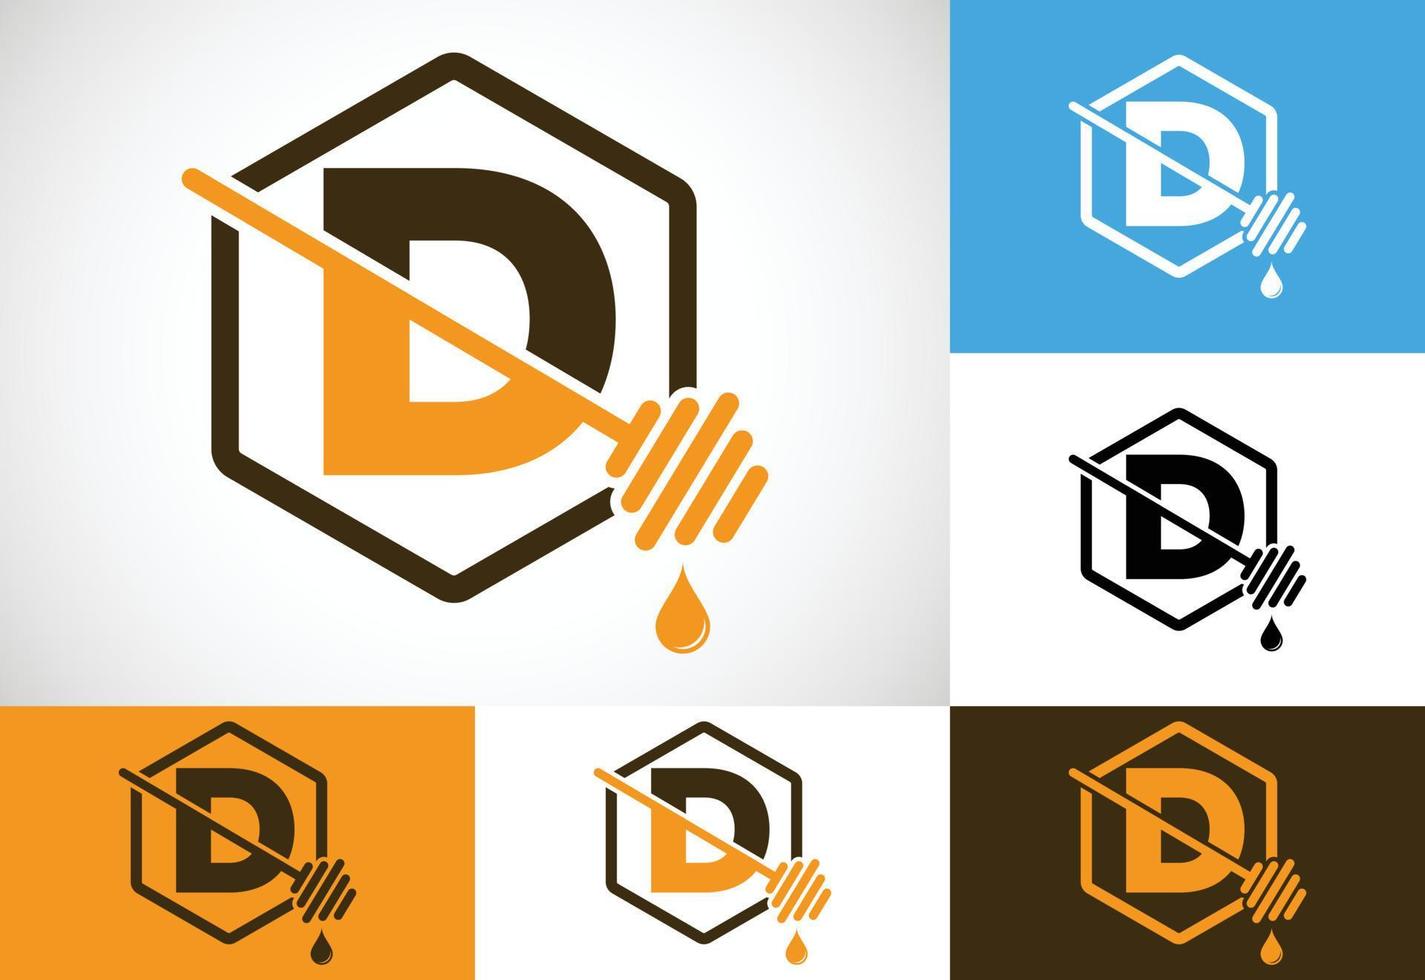 Initial letter D with honeycomb bees logo design vector illustration. Honey logo font emblem